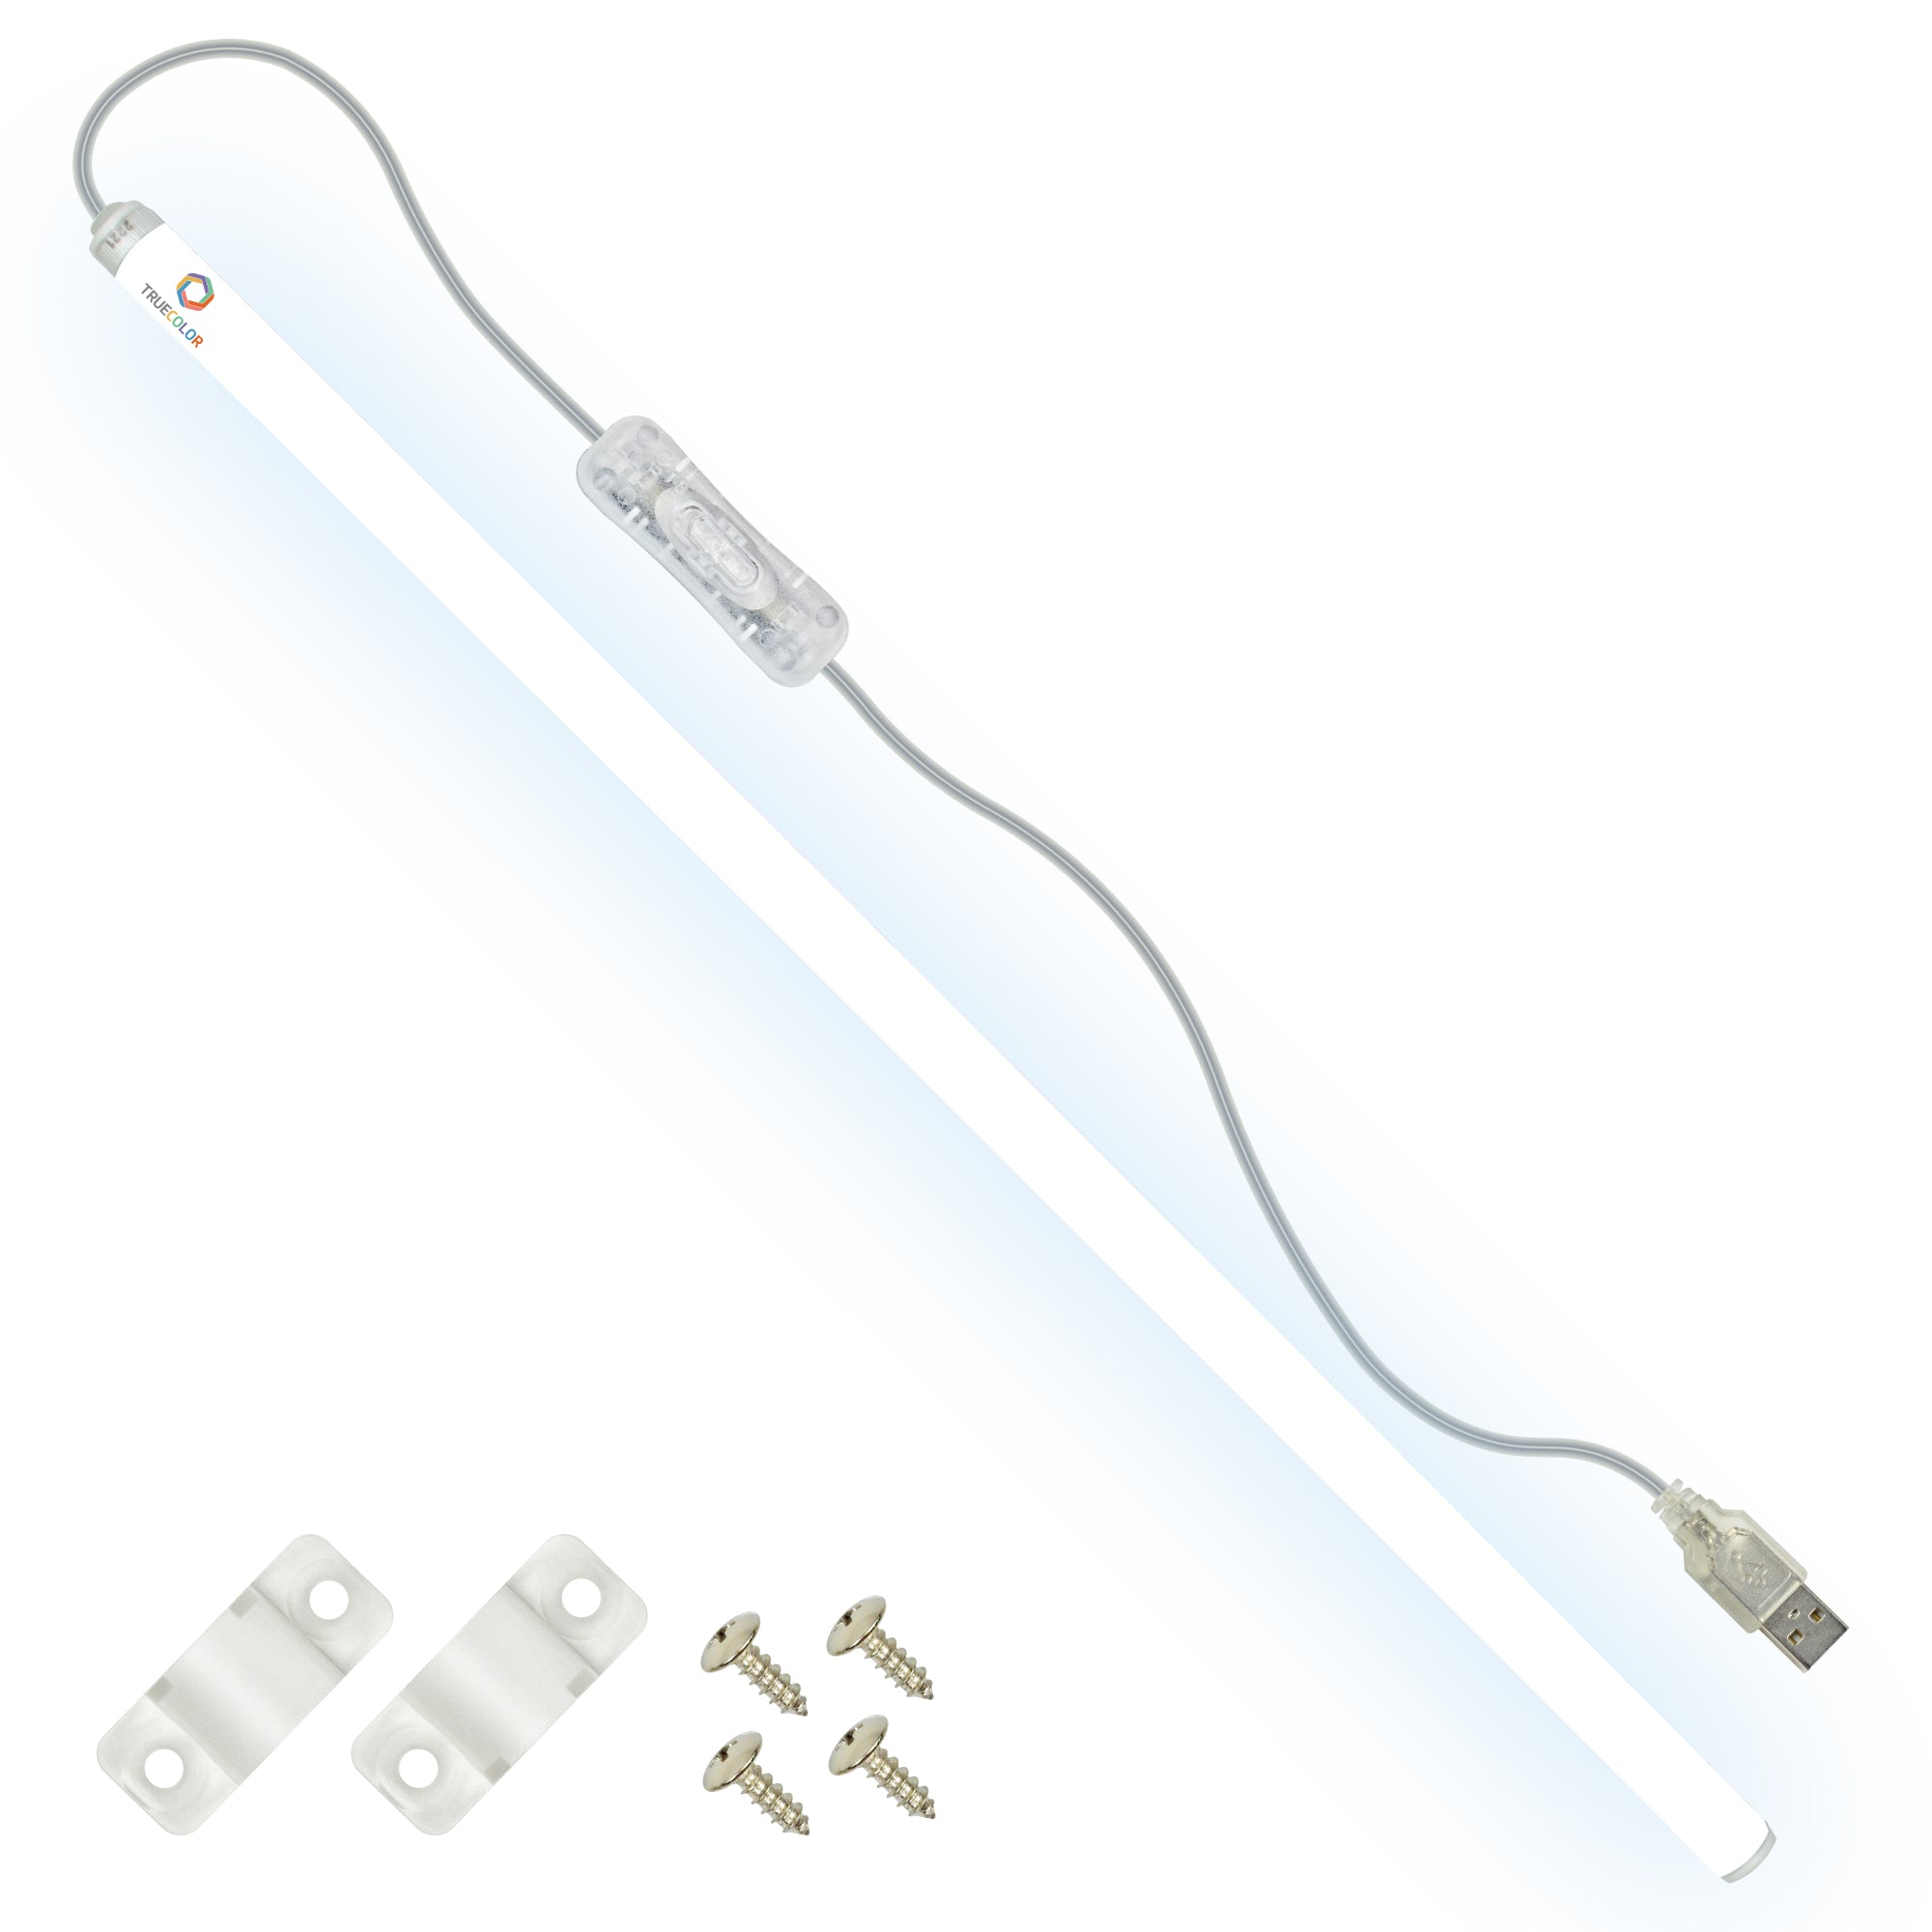 Sewing Machine LED Light Strip Light Kit DC 5V Flexible USB Sewing